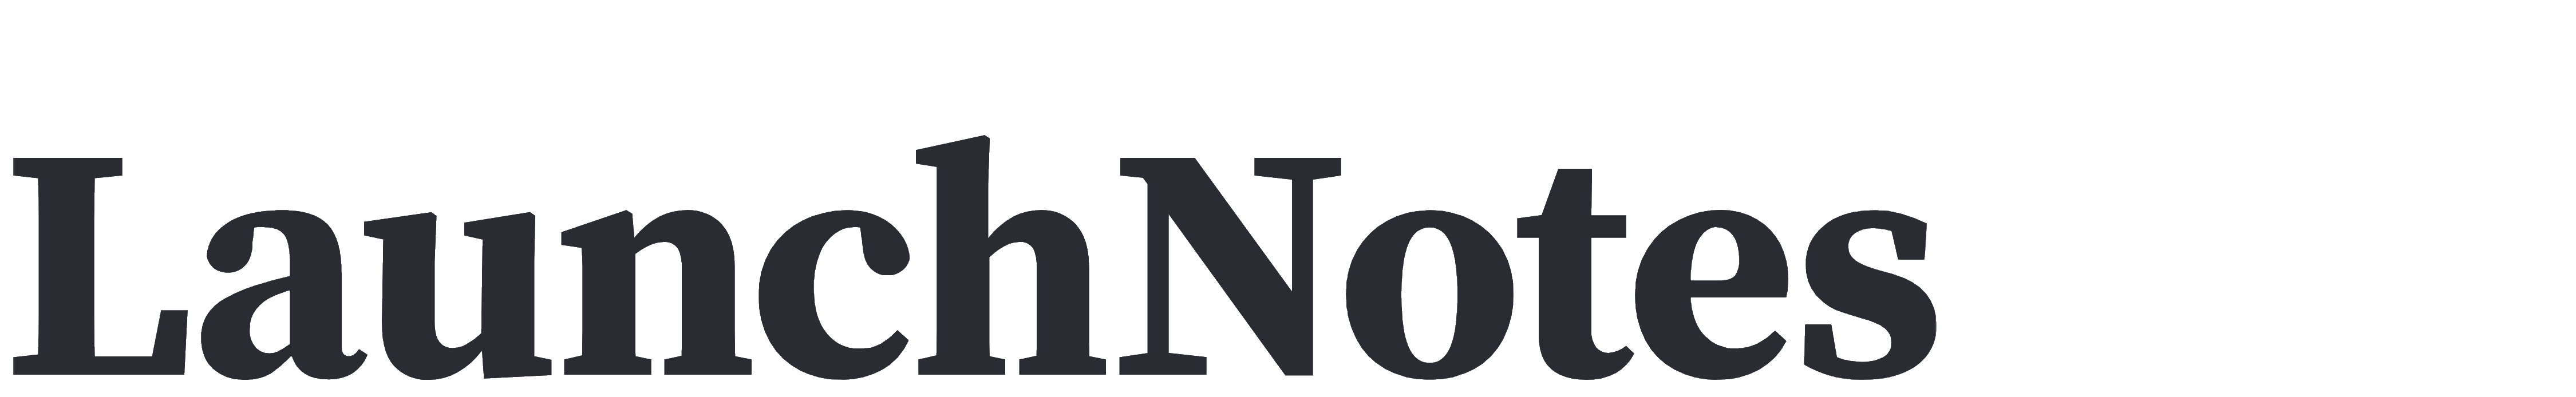 launchnotes logo